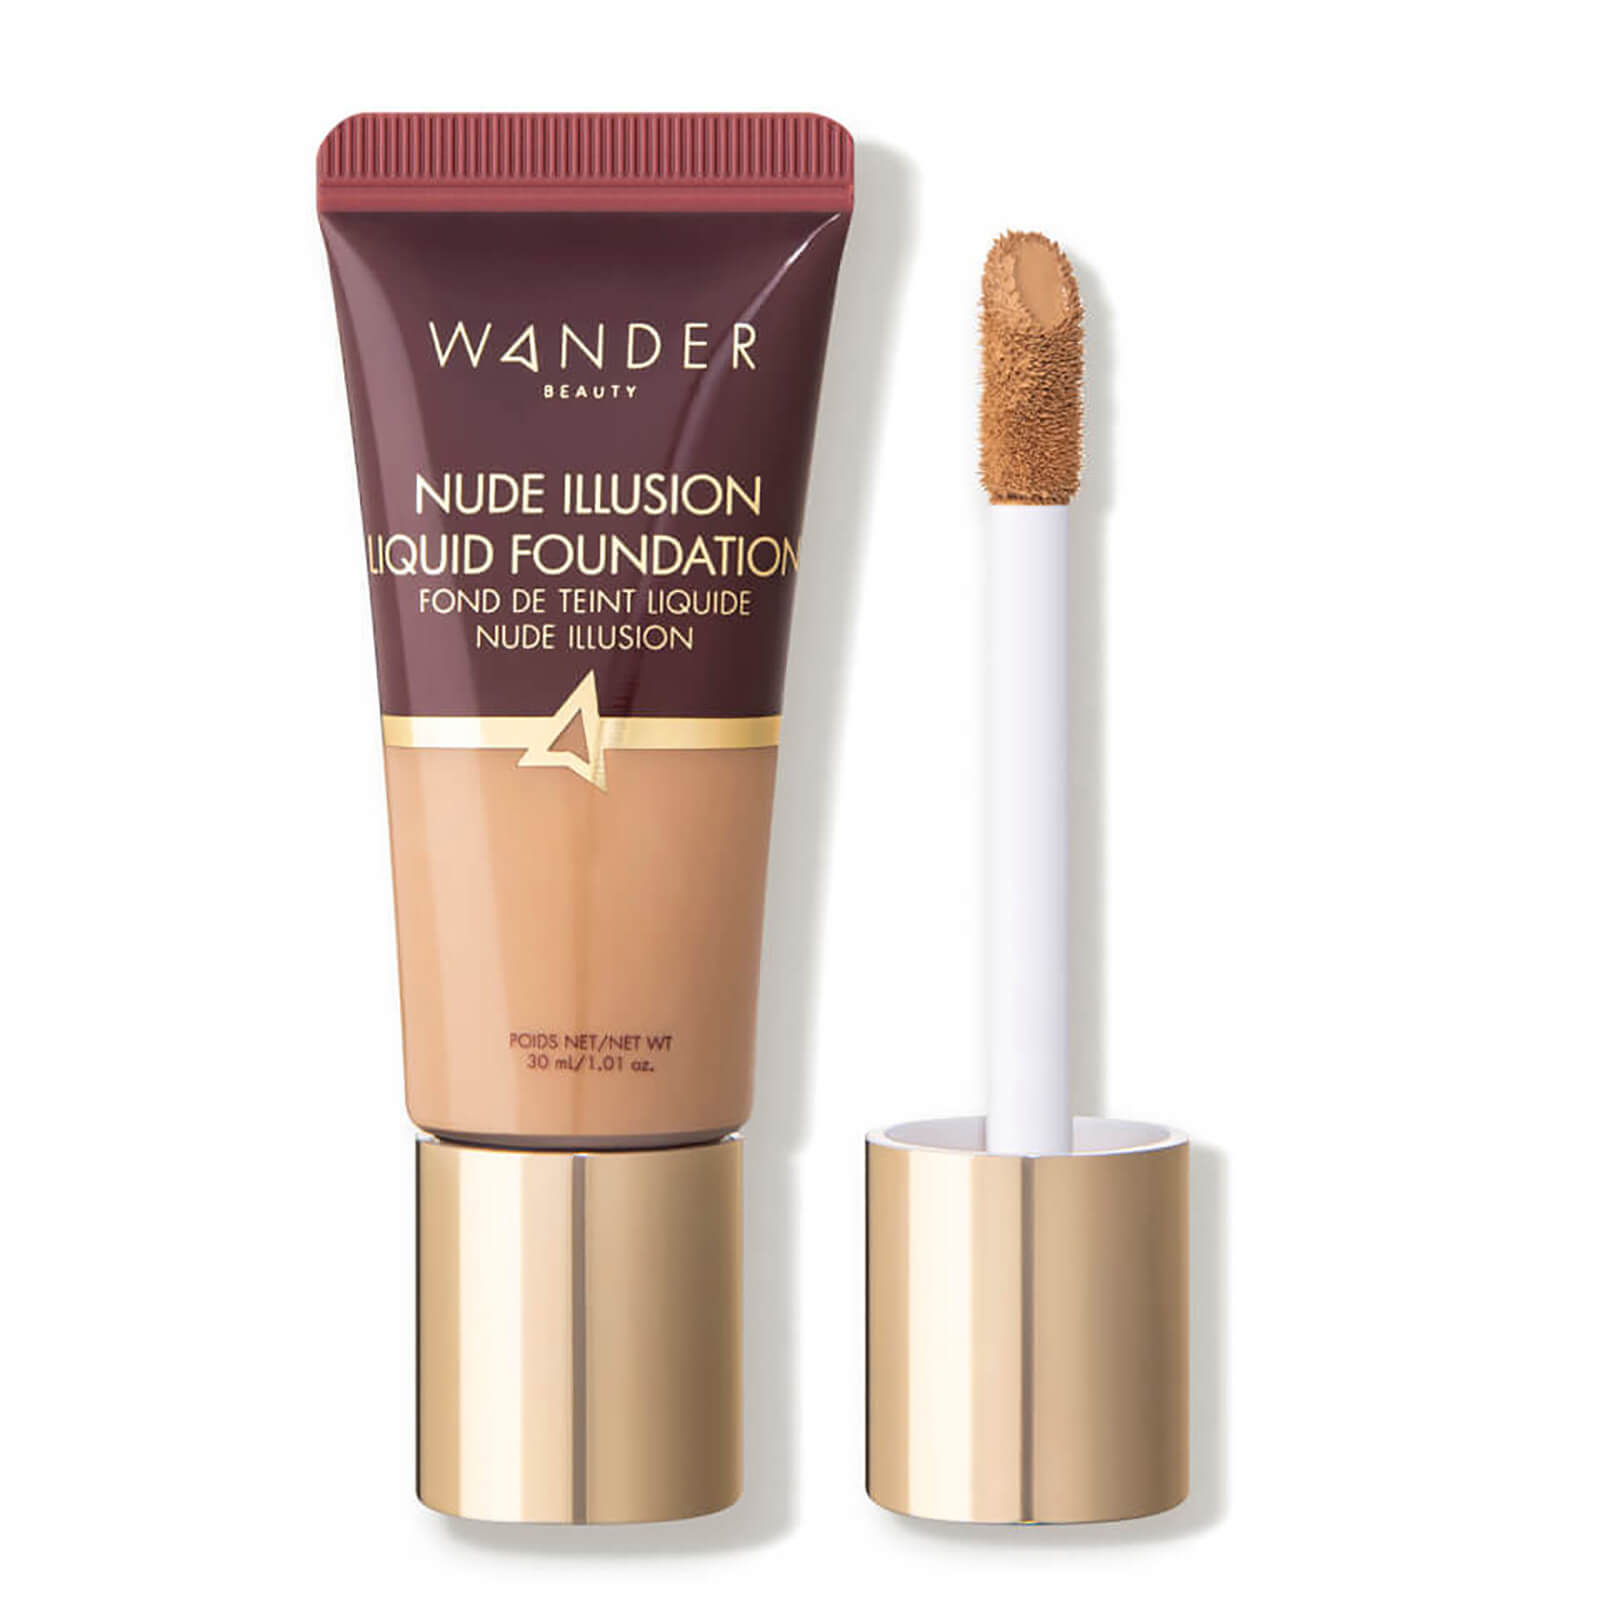 Wander Beauty Nude Illusion Liquid Foundation 1.01 oz (Various Shades) - Tan